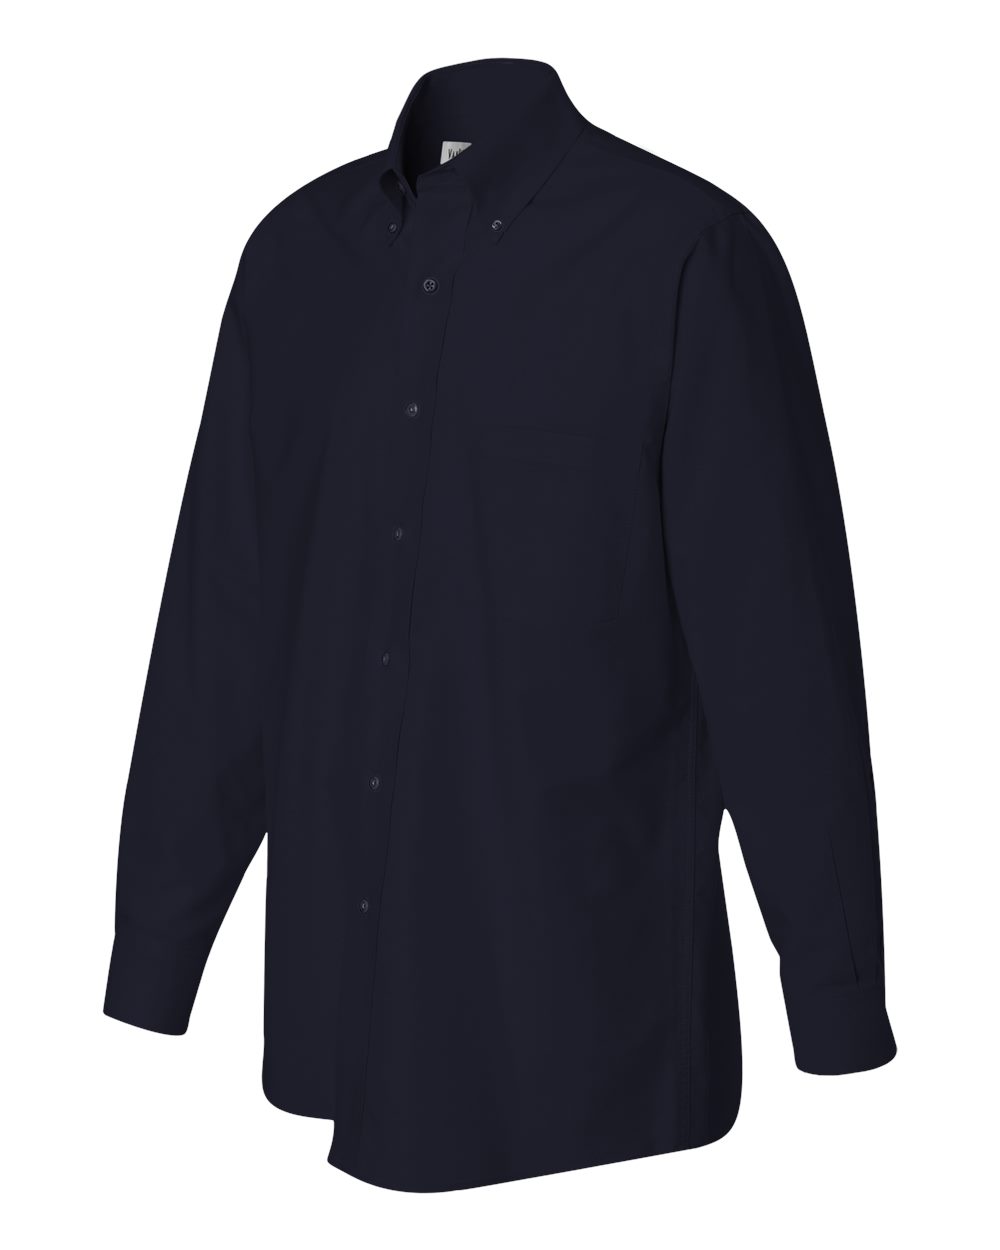 Van Heusen - Long Sleeve Oxford Shirt - 13V0040